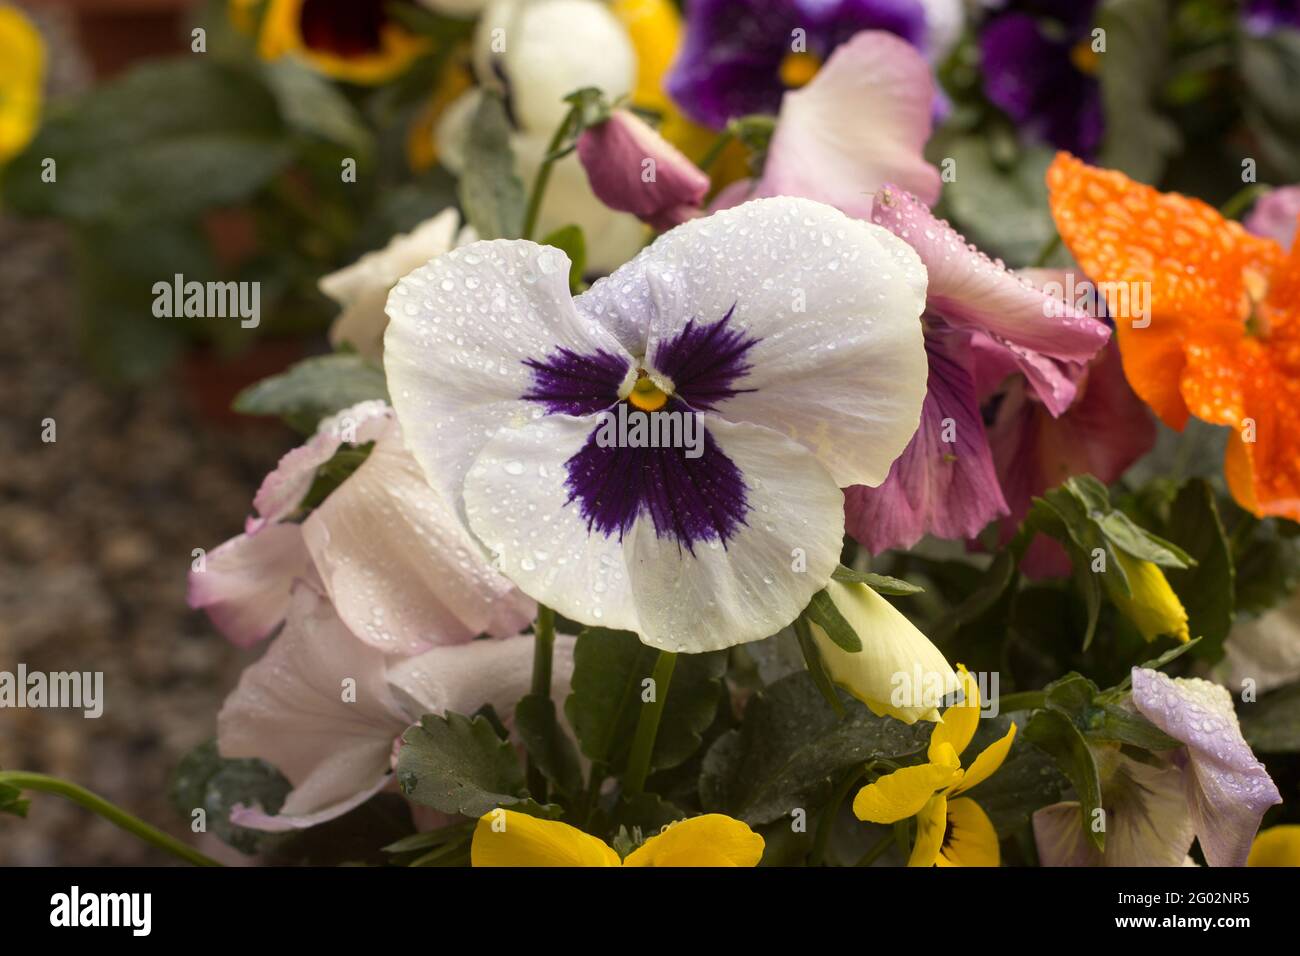 Viola wittrockiana pansy tricolor viola cornuta altaica with dew drops Stock Photo